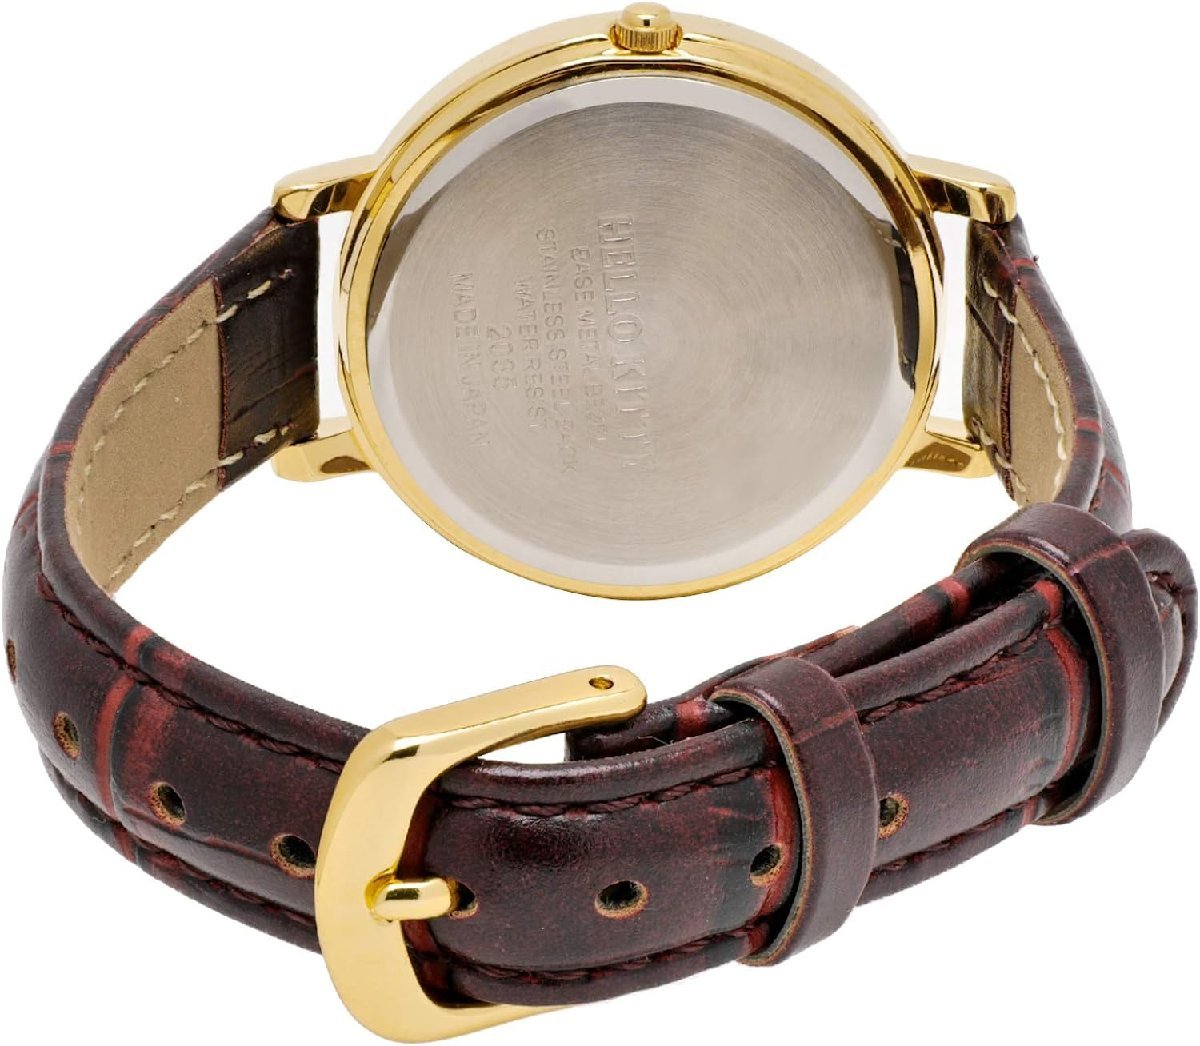  Citizen wristwatch Hello Kitty waterproof leather belt made in Japan 0031N103 Brown 4966006074482/ free shipping 